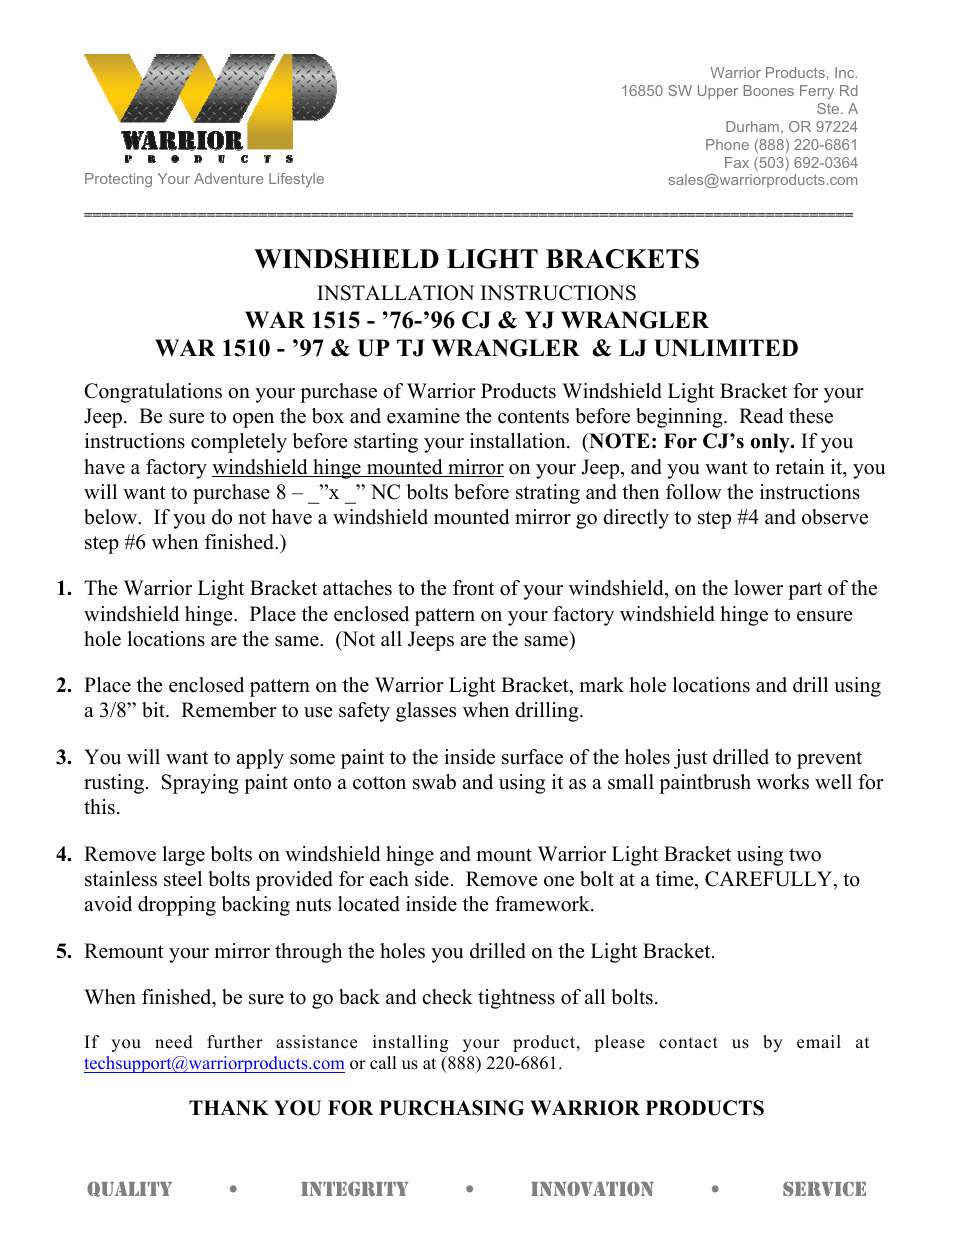 1510 - ’97 & UP TJ WRANGLER & LJ UNLIMITED WINDSHIELD LIGHT BRACKETS